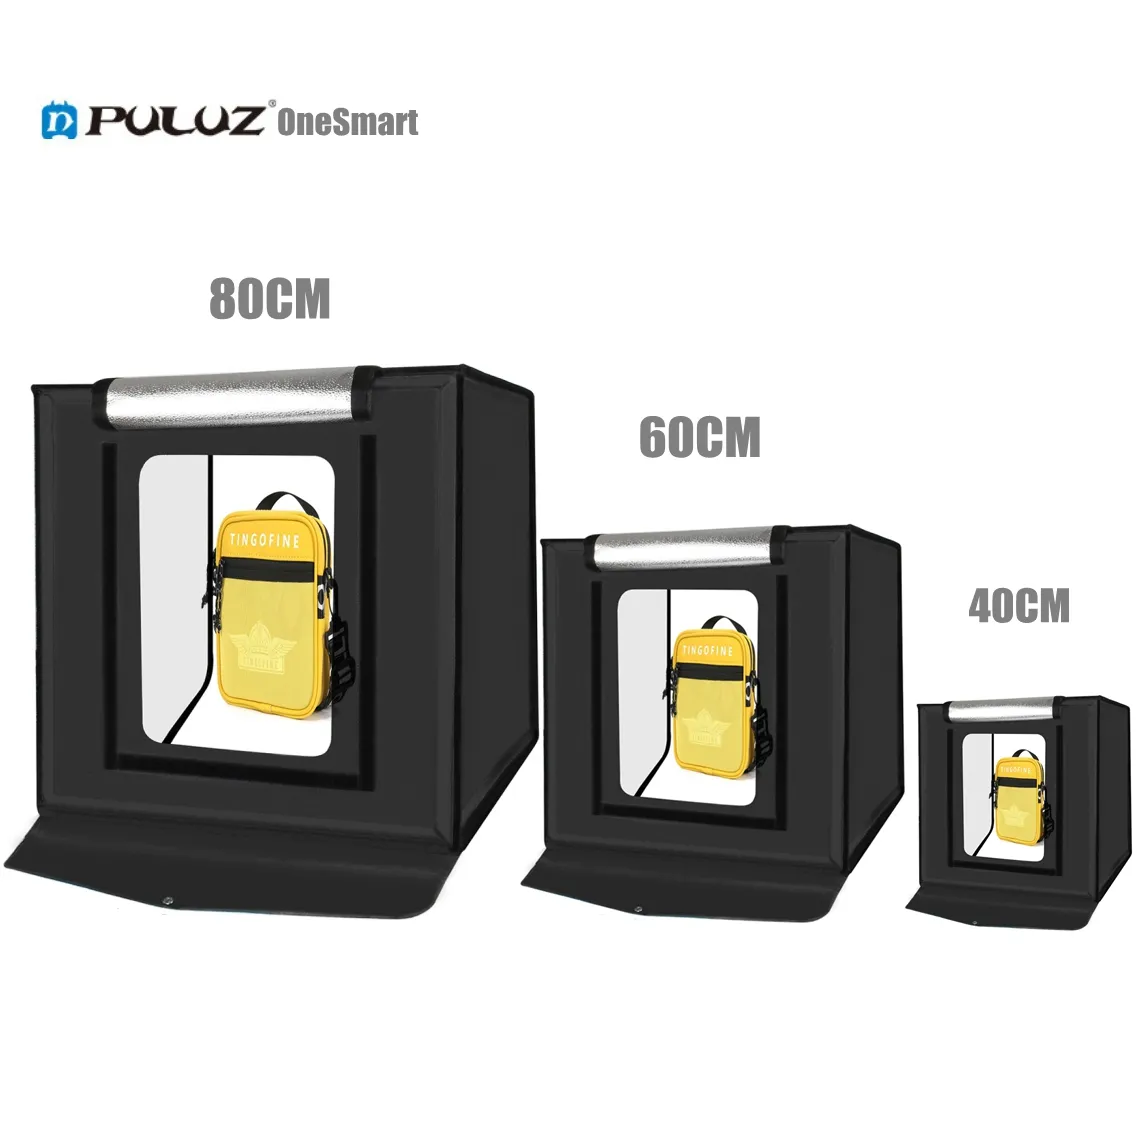 Puluz Top-Seller 40cm 60cm 80cm Box Led Brightbox Lighting fotobox Product Shooting Tent lighting cube for photography